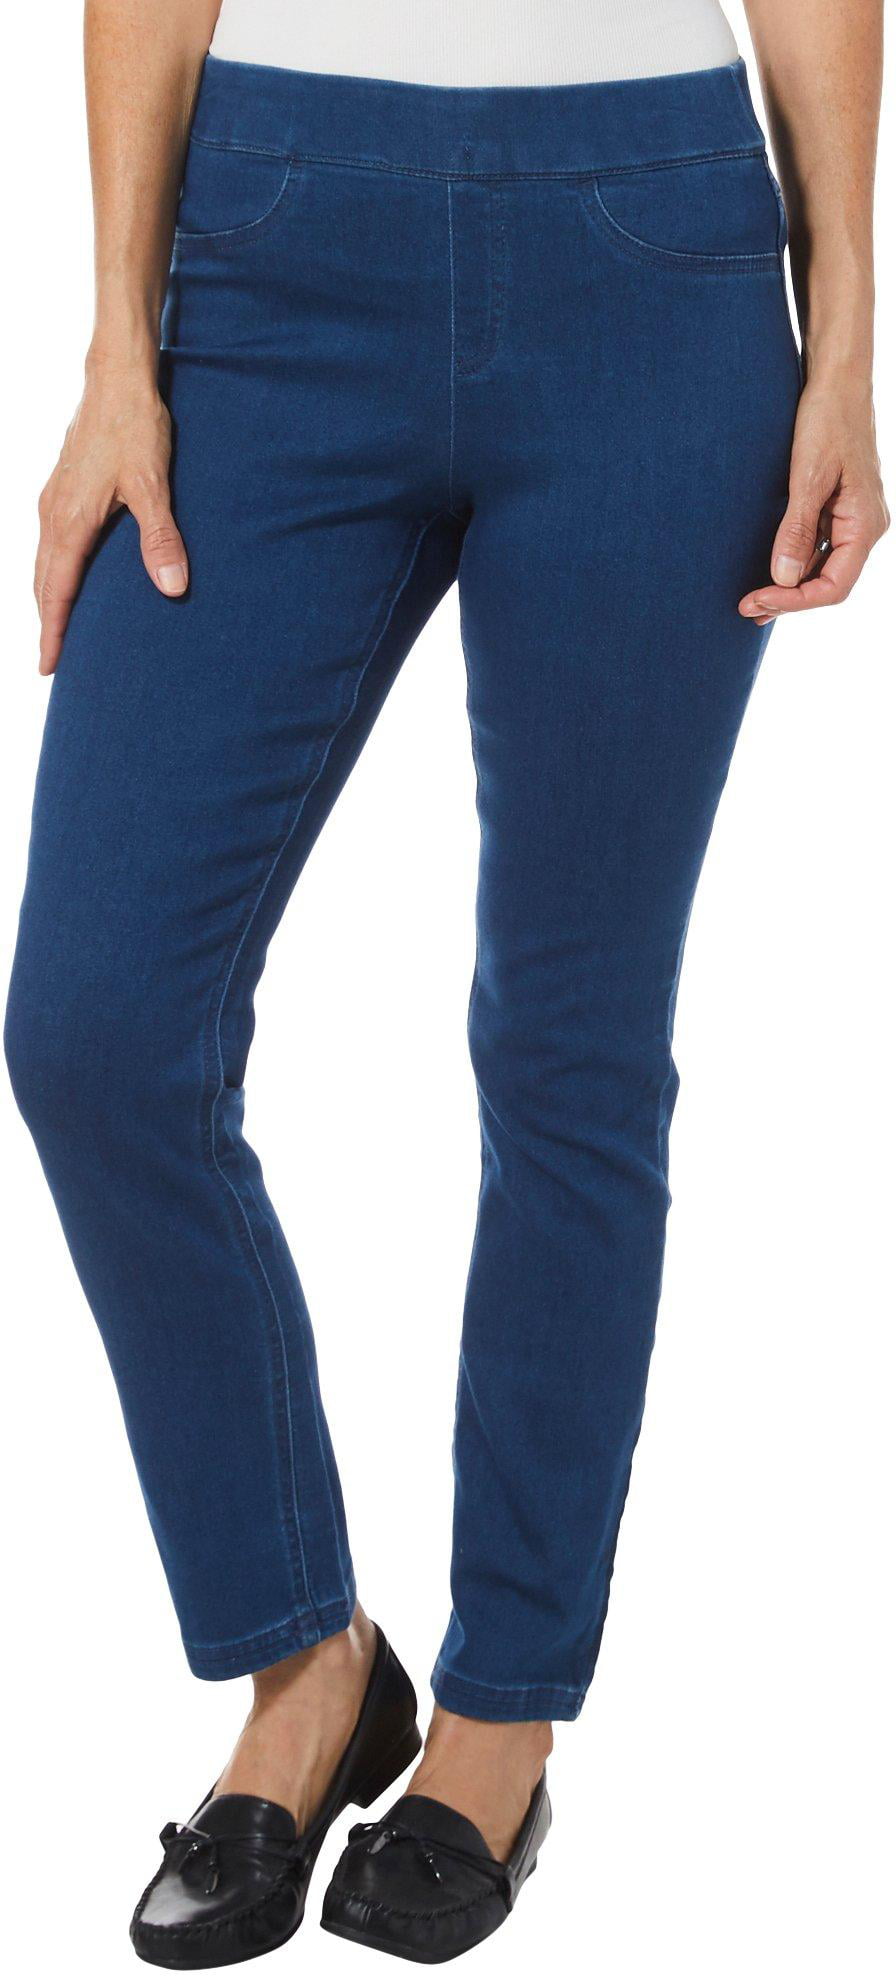 My Fit Jeans DARK WASH Inteli-Stretch Denim Technology and Pockets 2-12 or 12-20